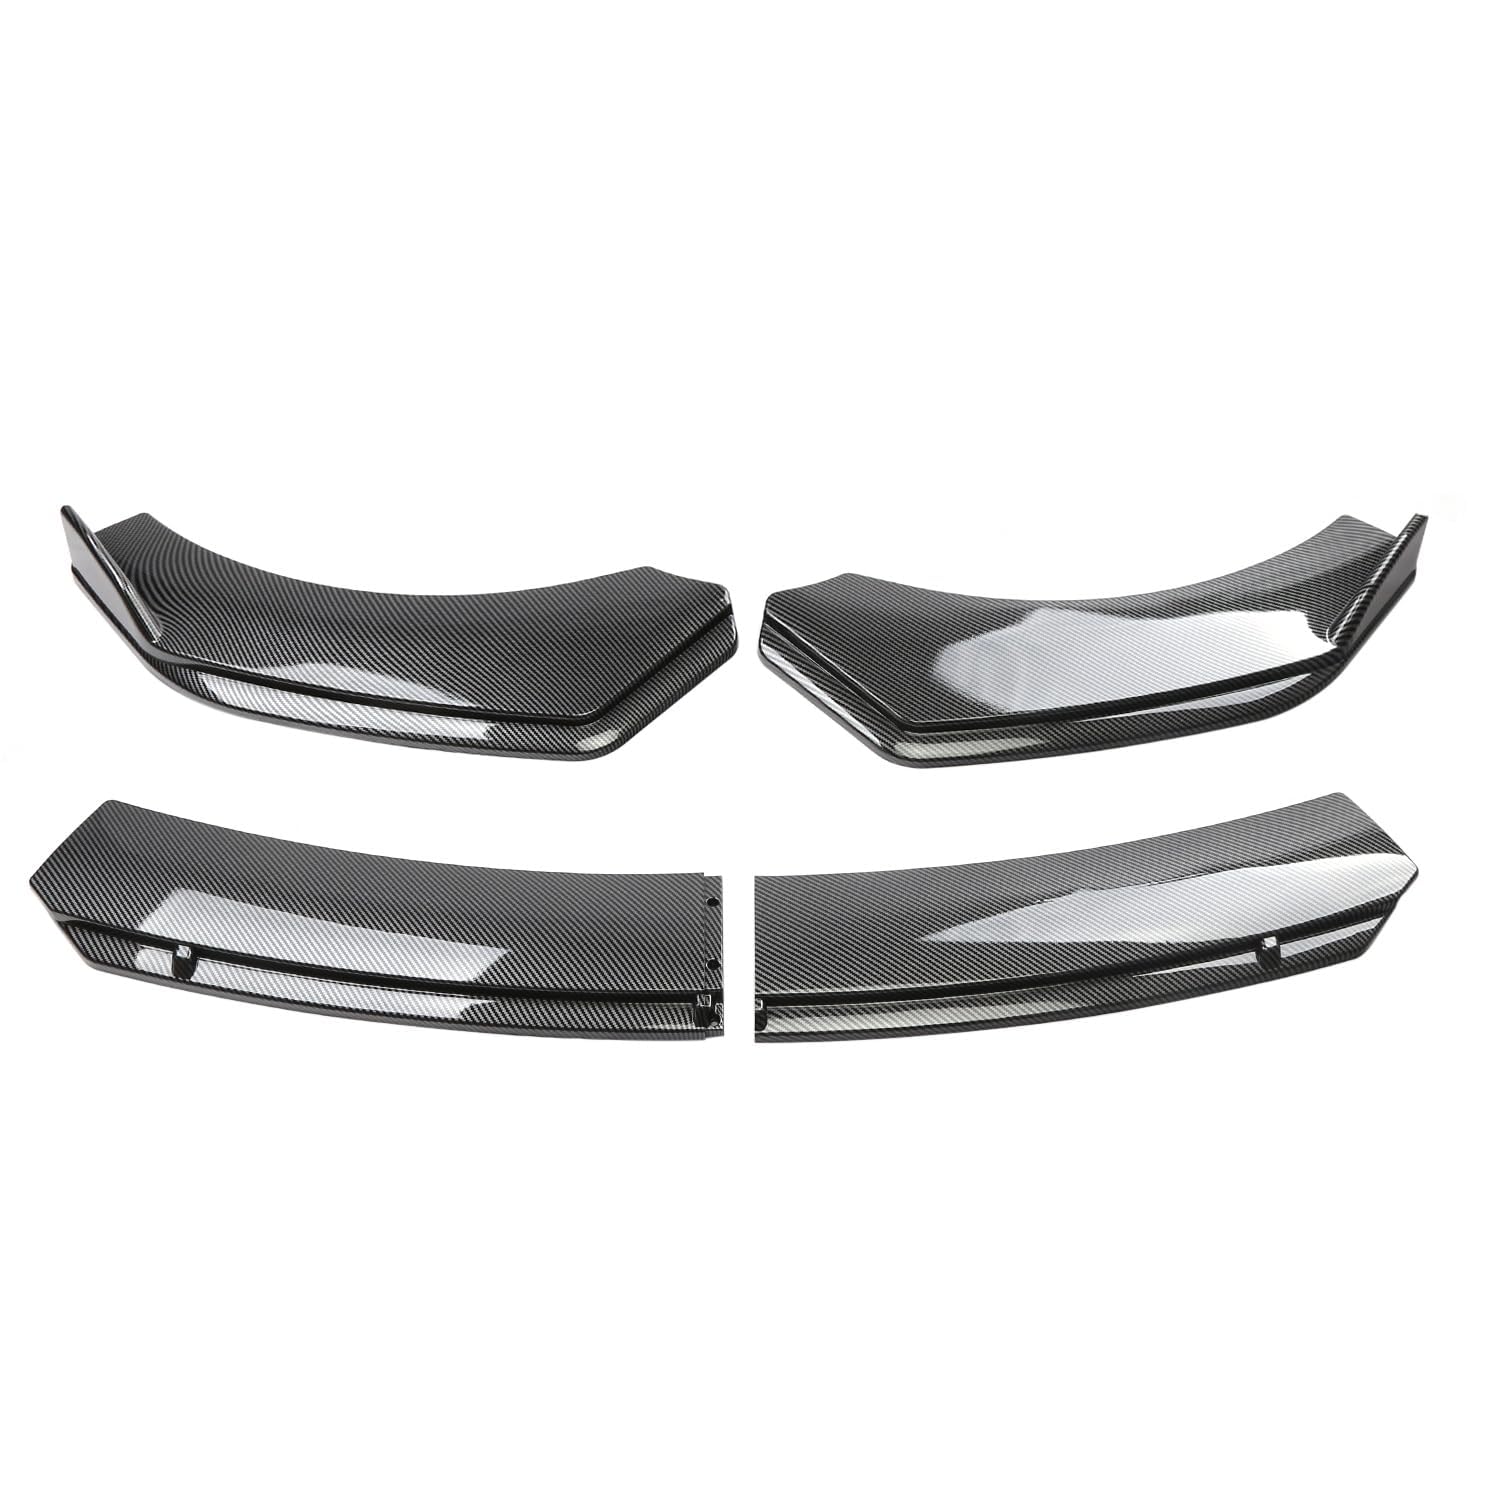 Auto Frontlippe Frontspoiler für Mercedes-Benz ML-Class (W166) 2012-2015, Frontstoßstange Splitter Lip Diffusor Frontspoiler Protector Kits,A/carbon fibre black von LCGAF